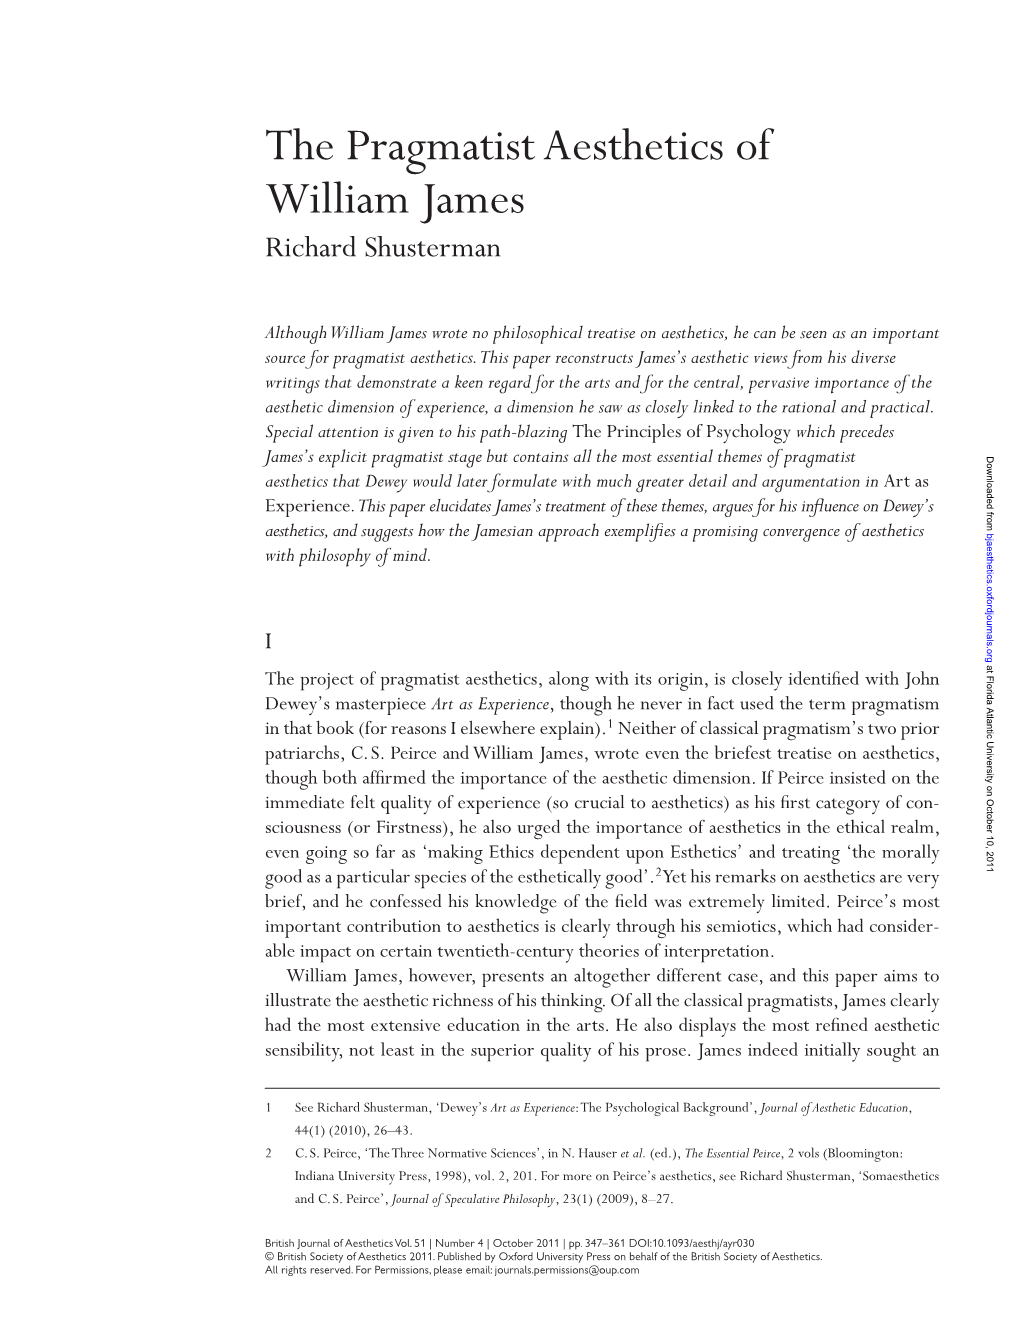 The Pragmatist Aesthetics of William James Richard Shusterman